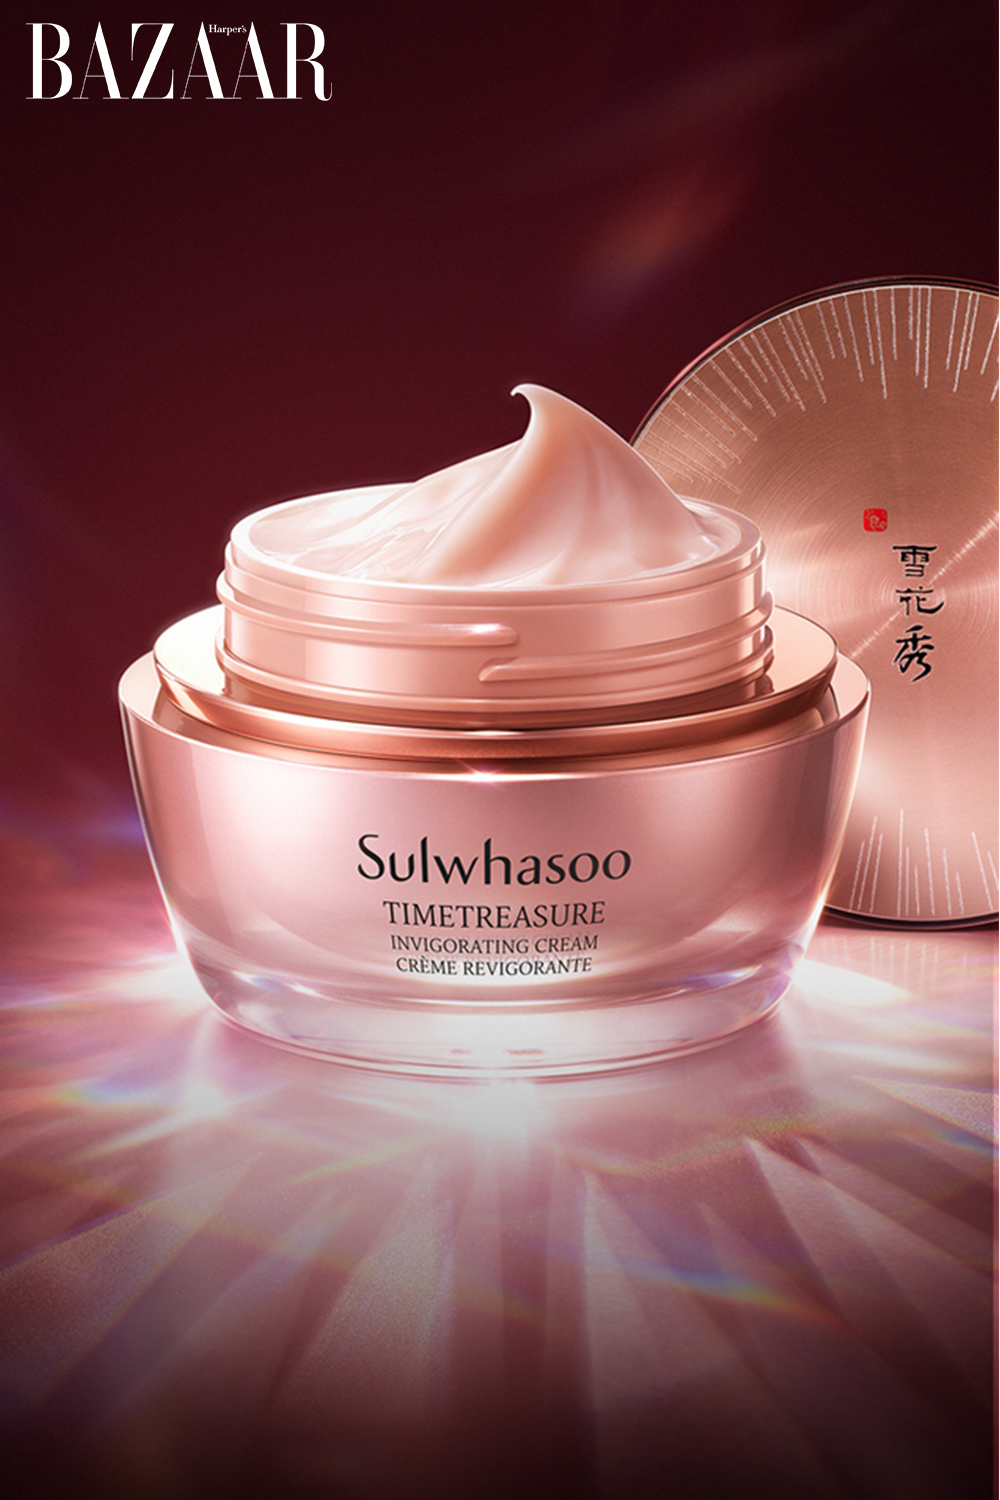 Sulwhasoo Timetreasure Invigorating Cream giúp trẻ hoá da.